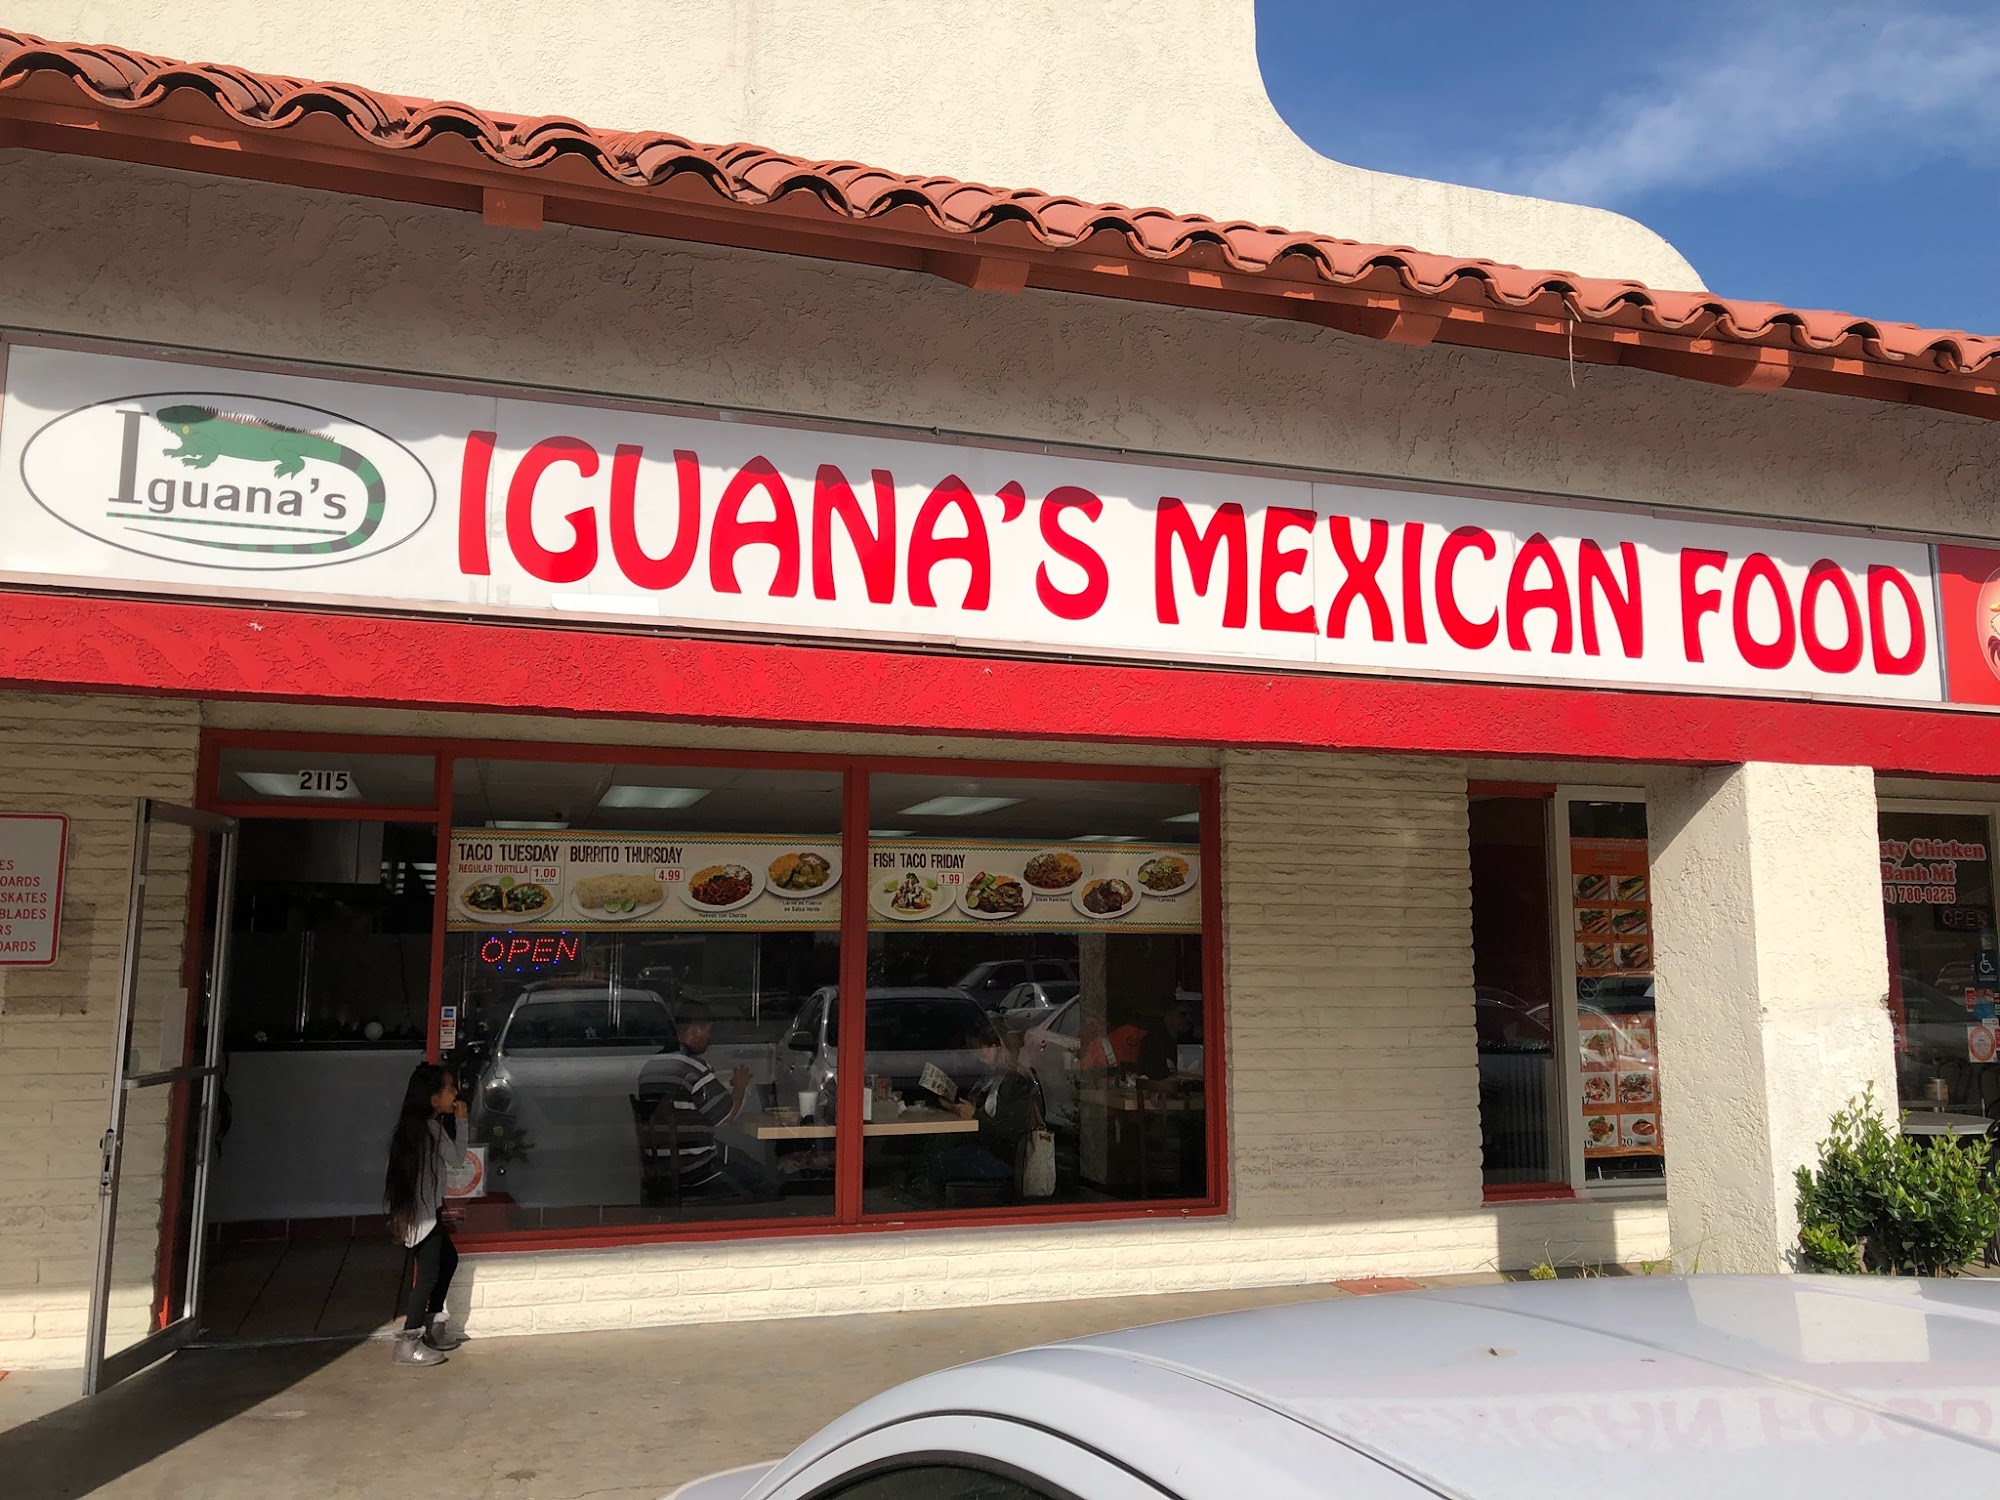 Iguana's Mexican Food